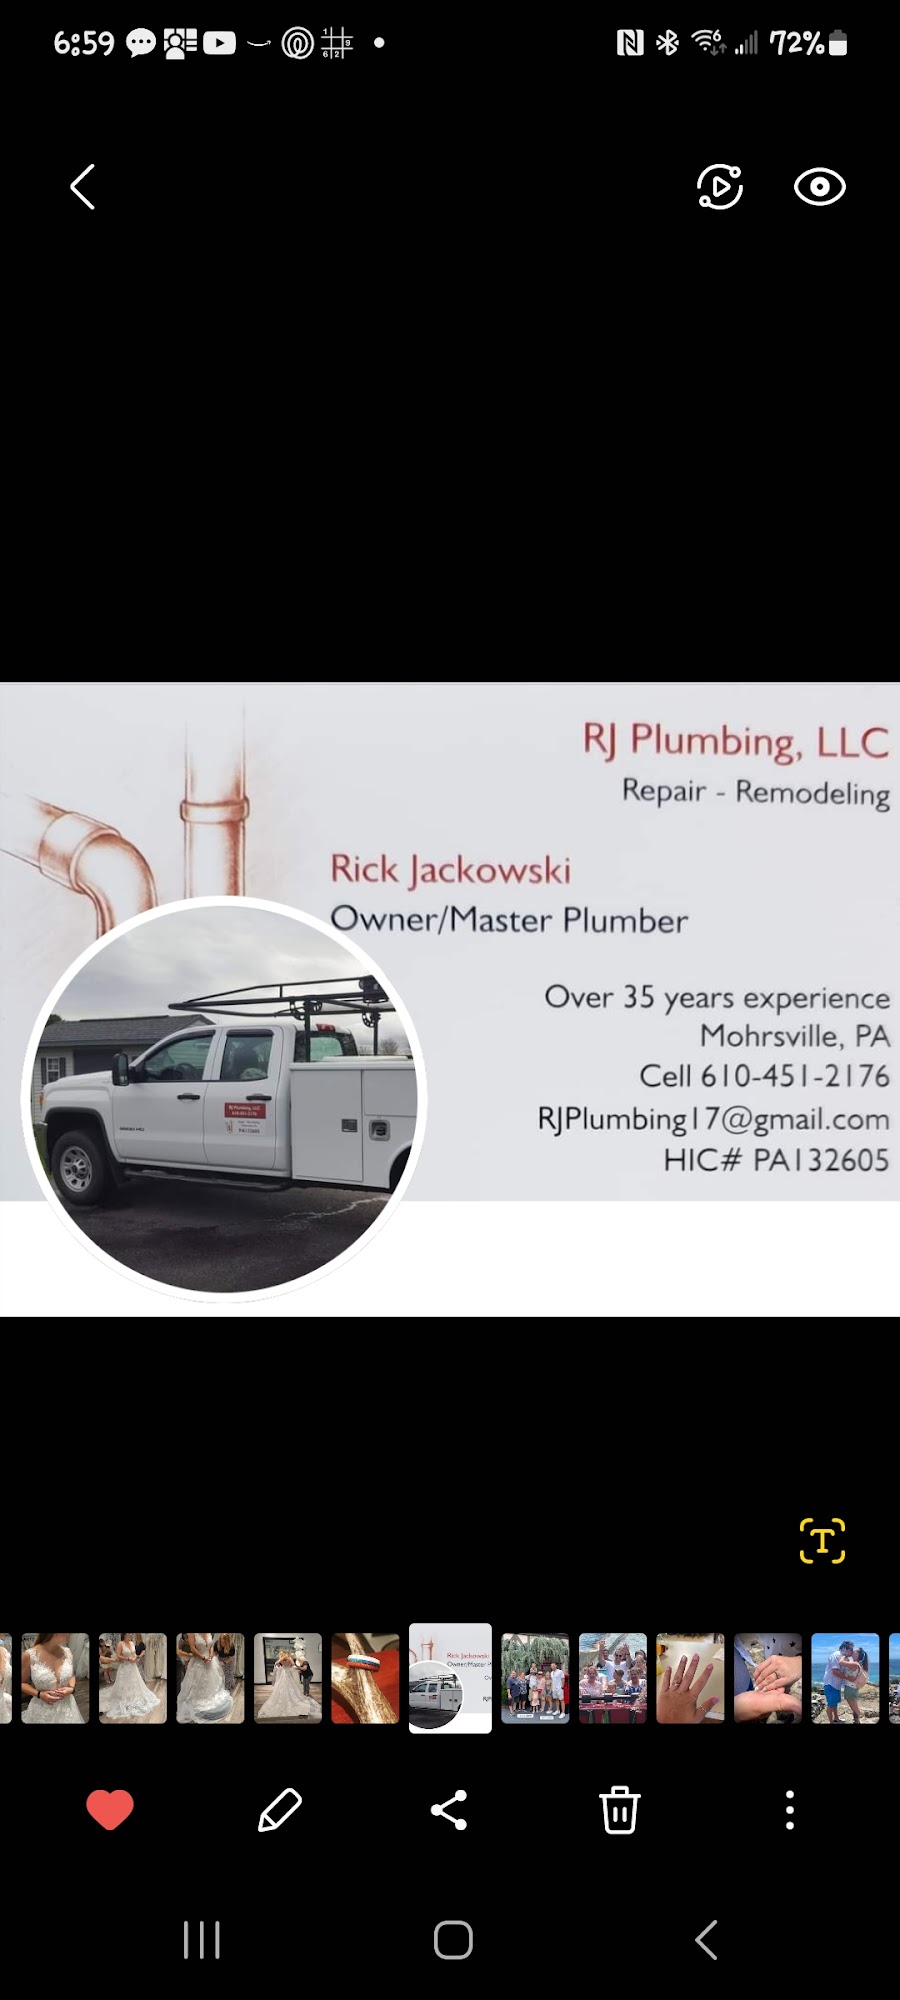 RJ Plumbing, LLC 3 Dogwood Rd, Mohrsville Pennsylvania 19541